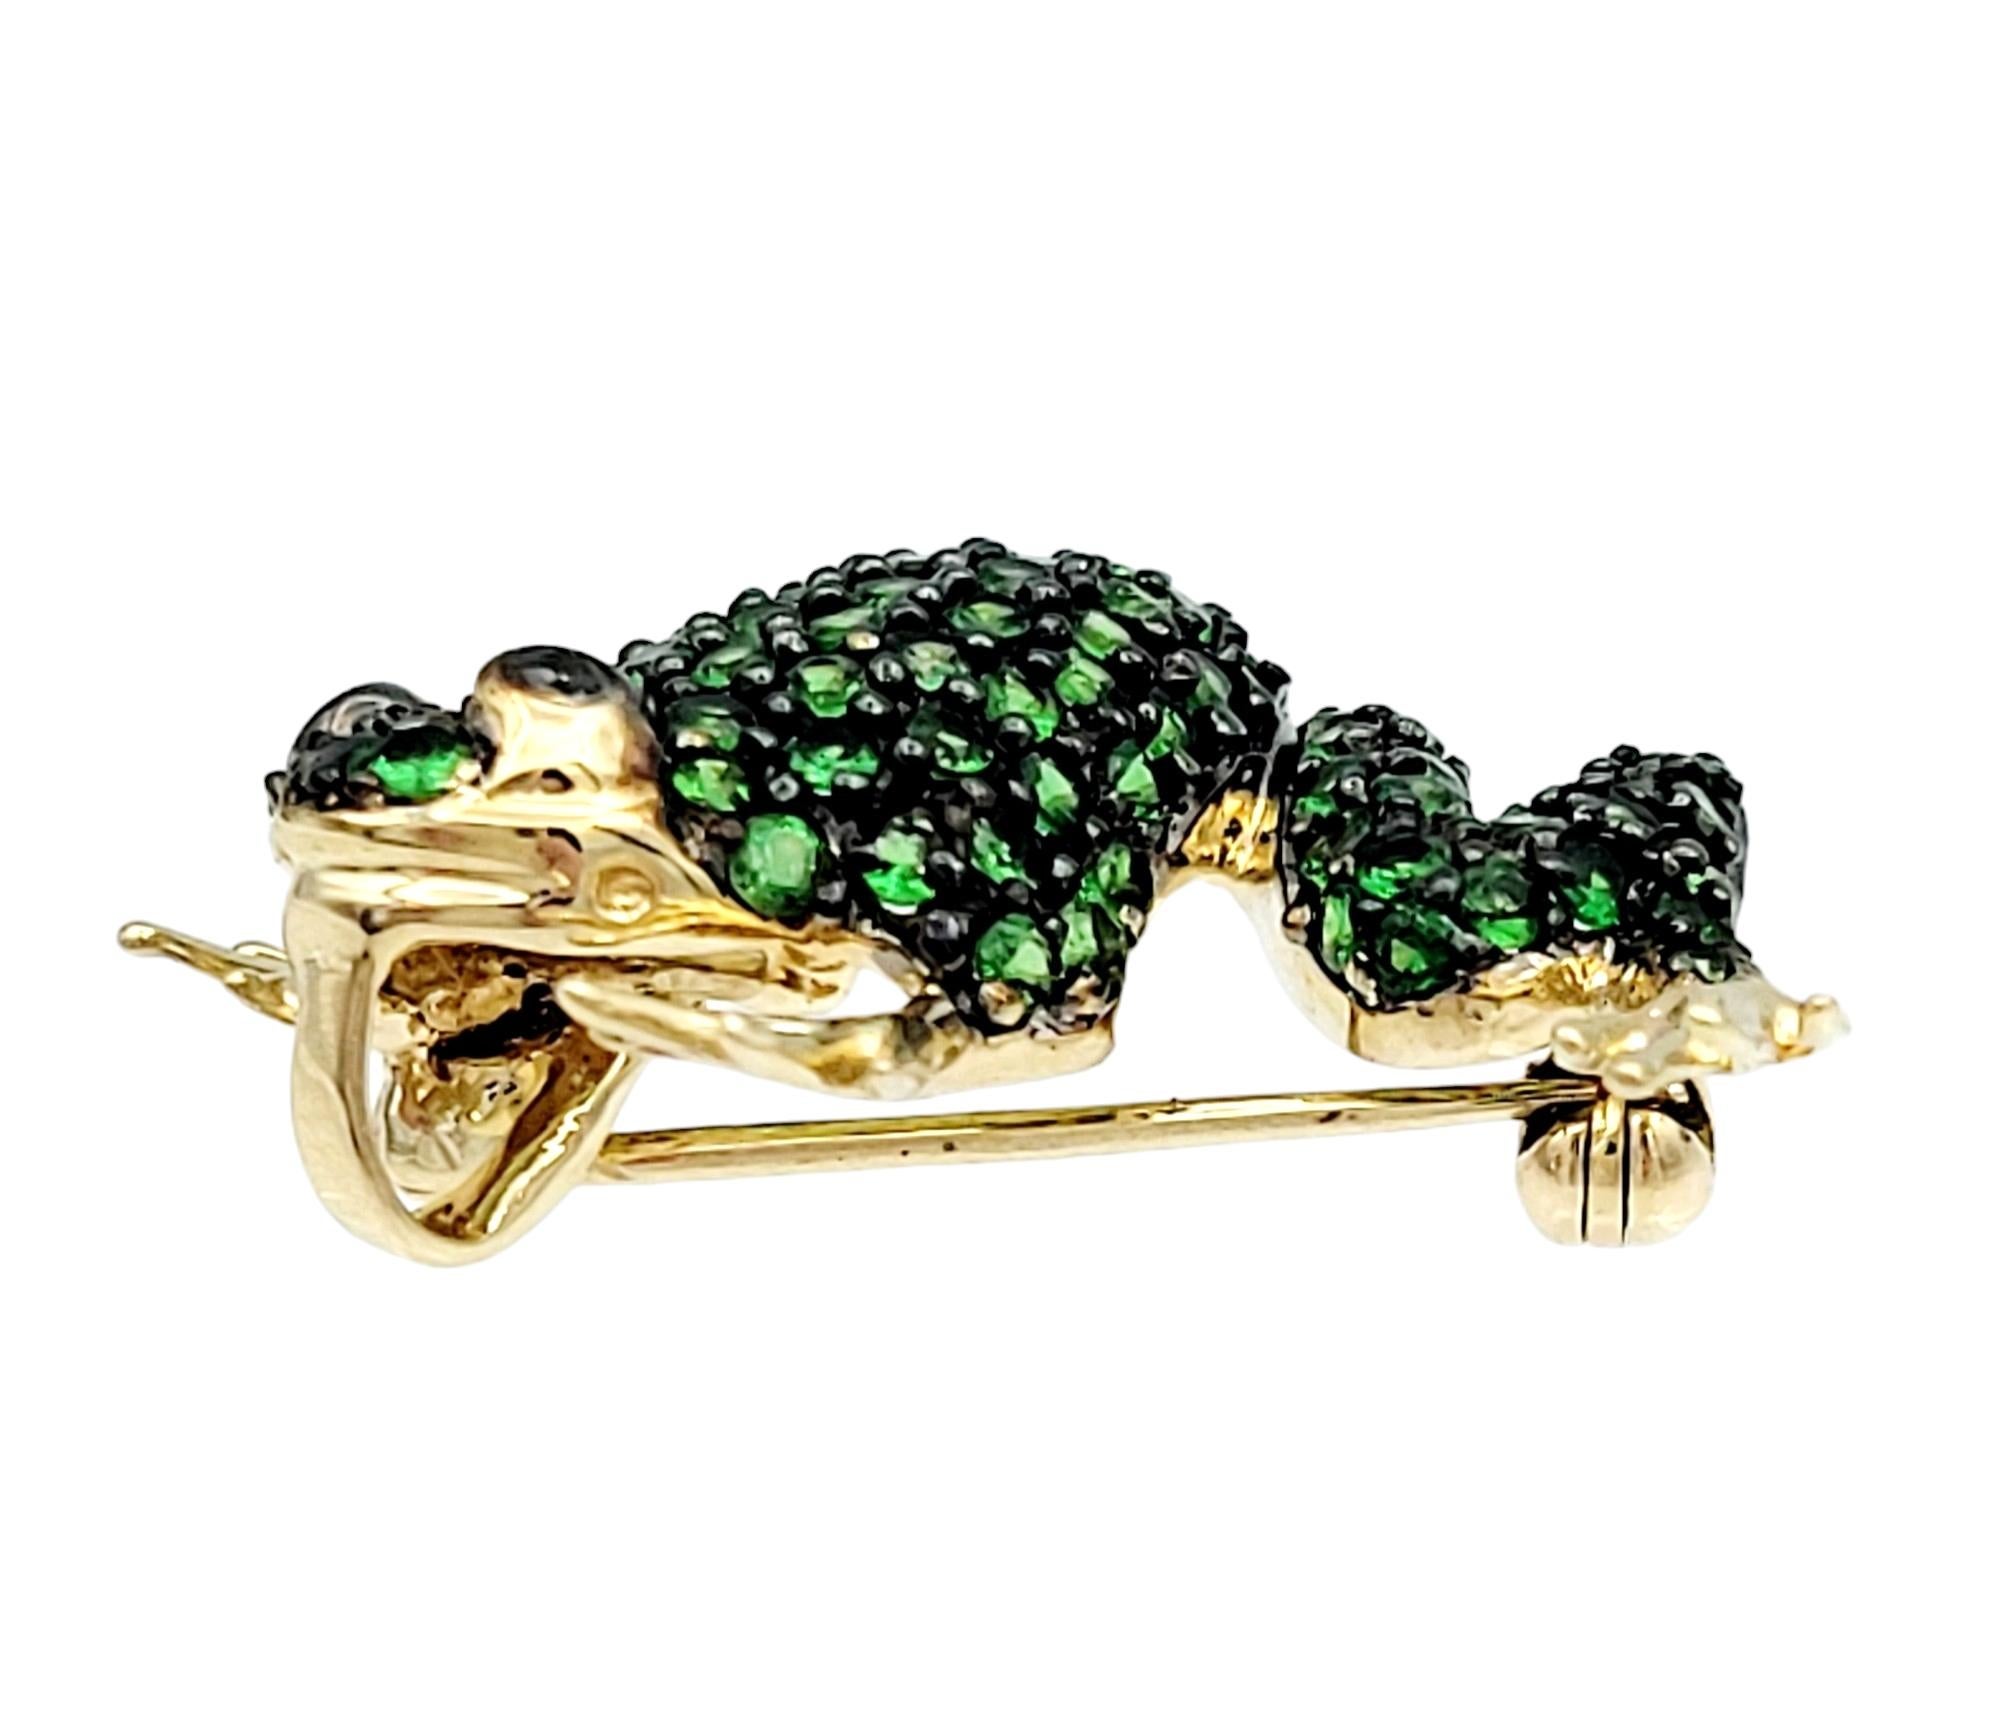 Contemporary Round Green Tsavorite Embellished Frog Brooch / Pendant in 14 Karat Yellow Gold